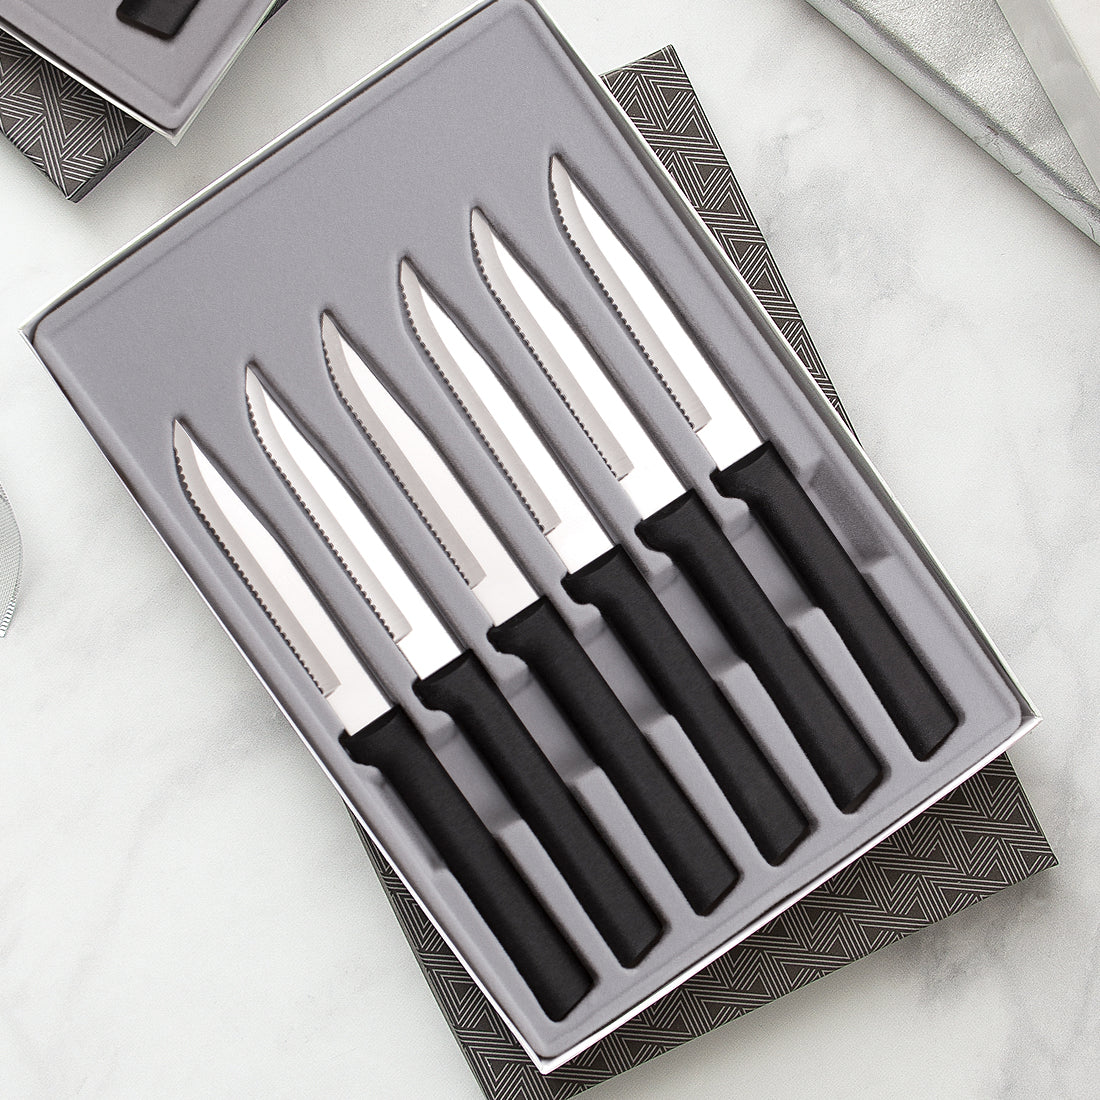 Kitchen Knives Gift Set - 4 Serrated Steak Knives 5' Set in Wooden Box